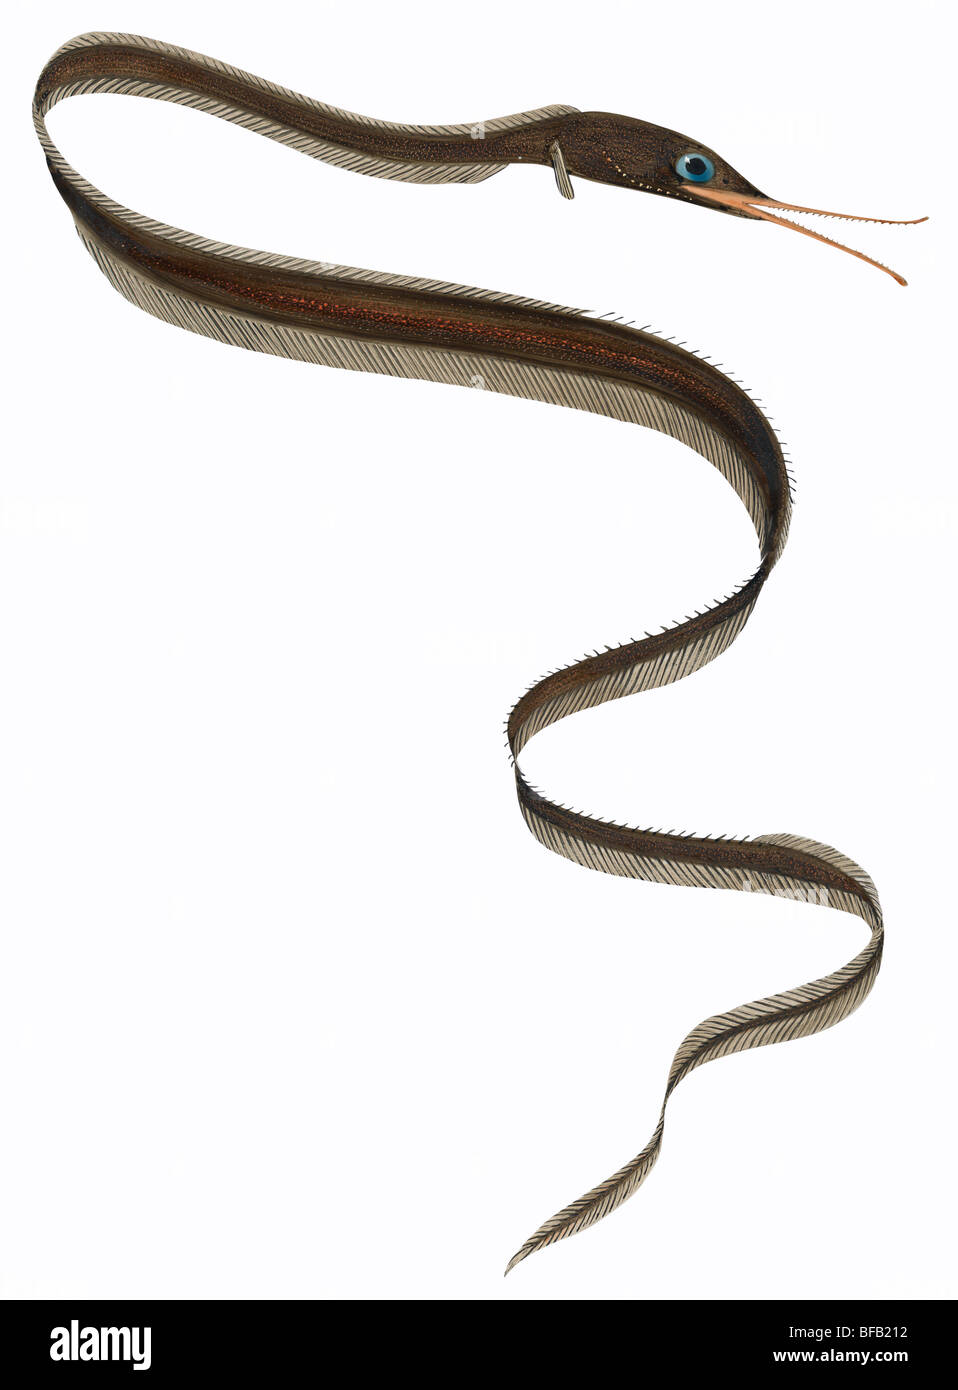 Slender snipe eel Stock Photo